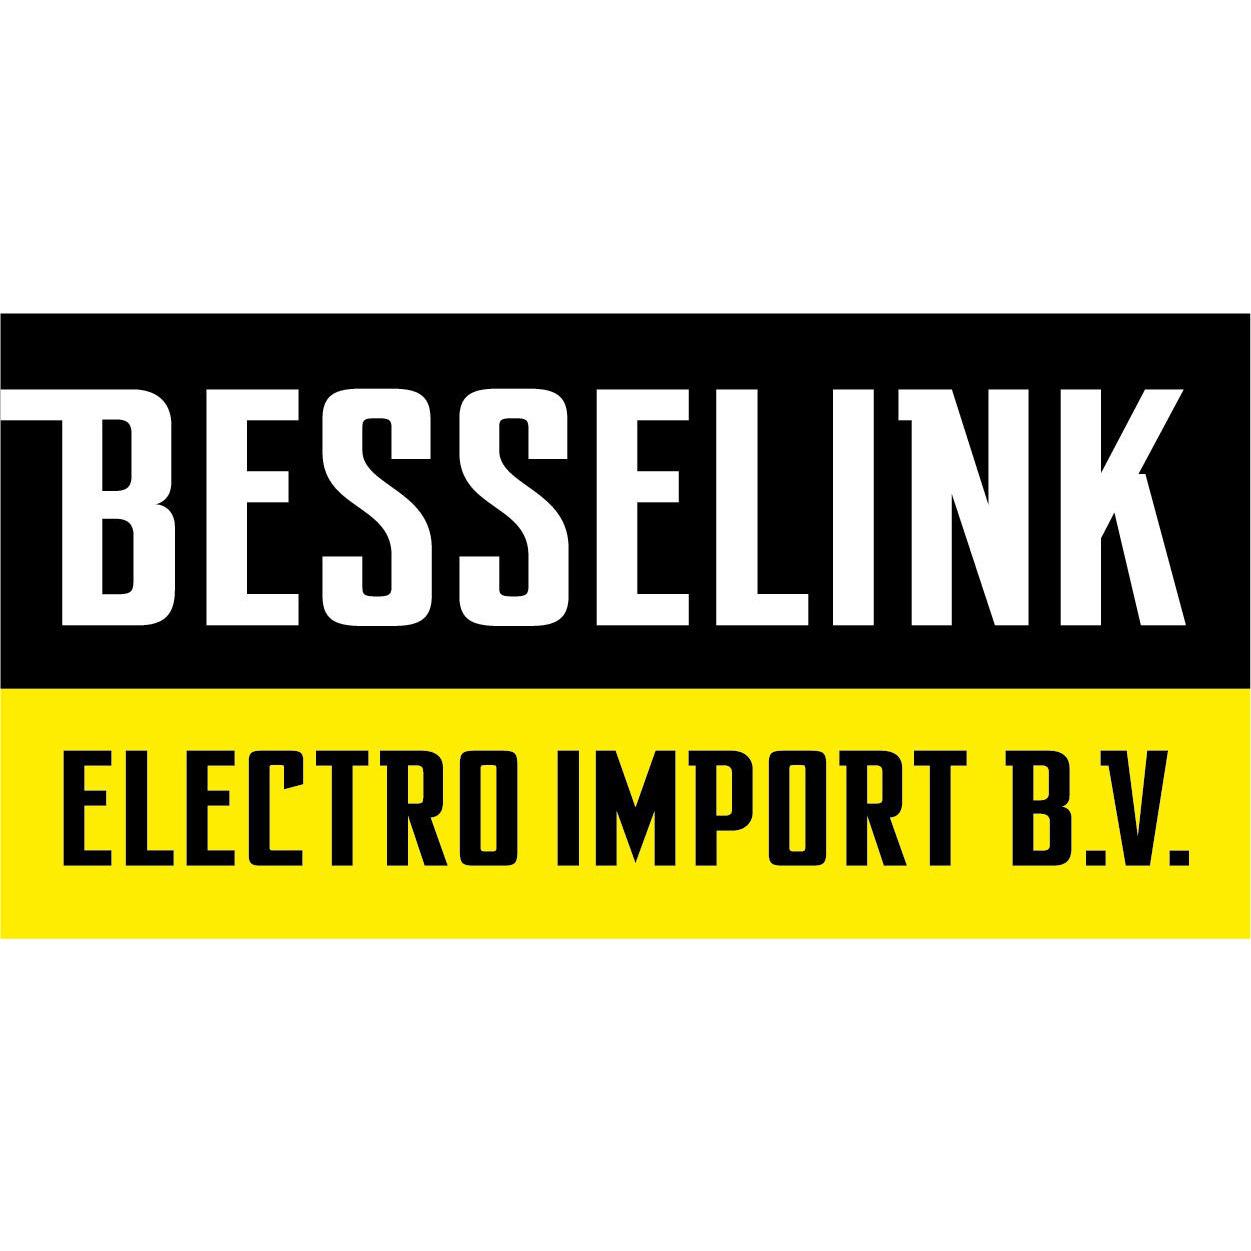 Electro Import Besselink Logo